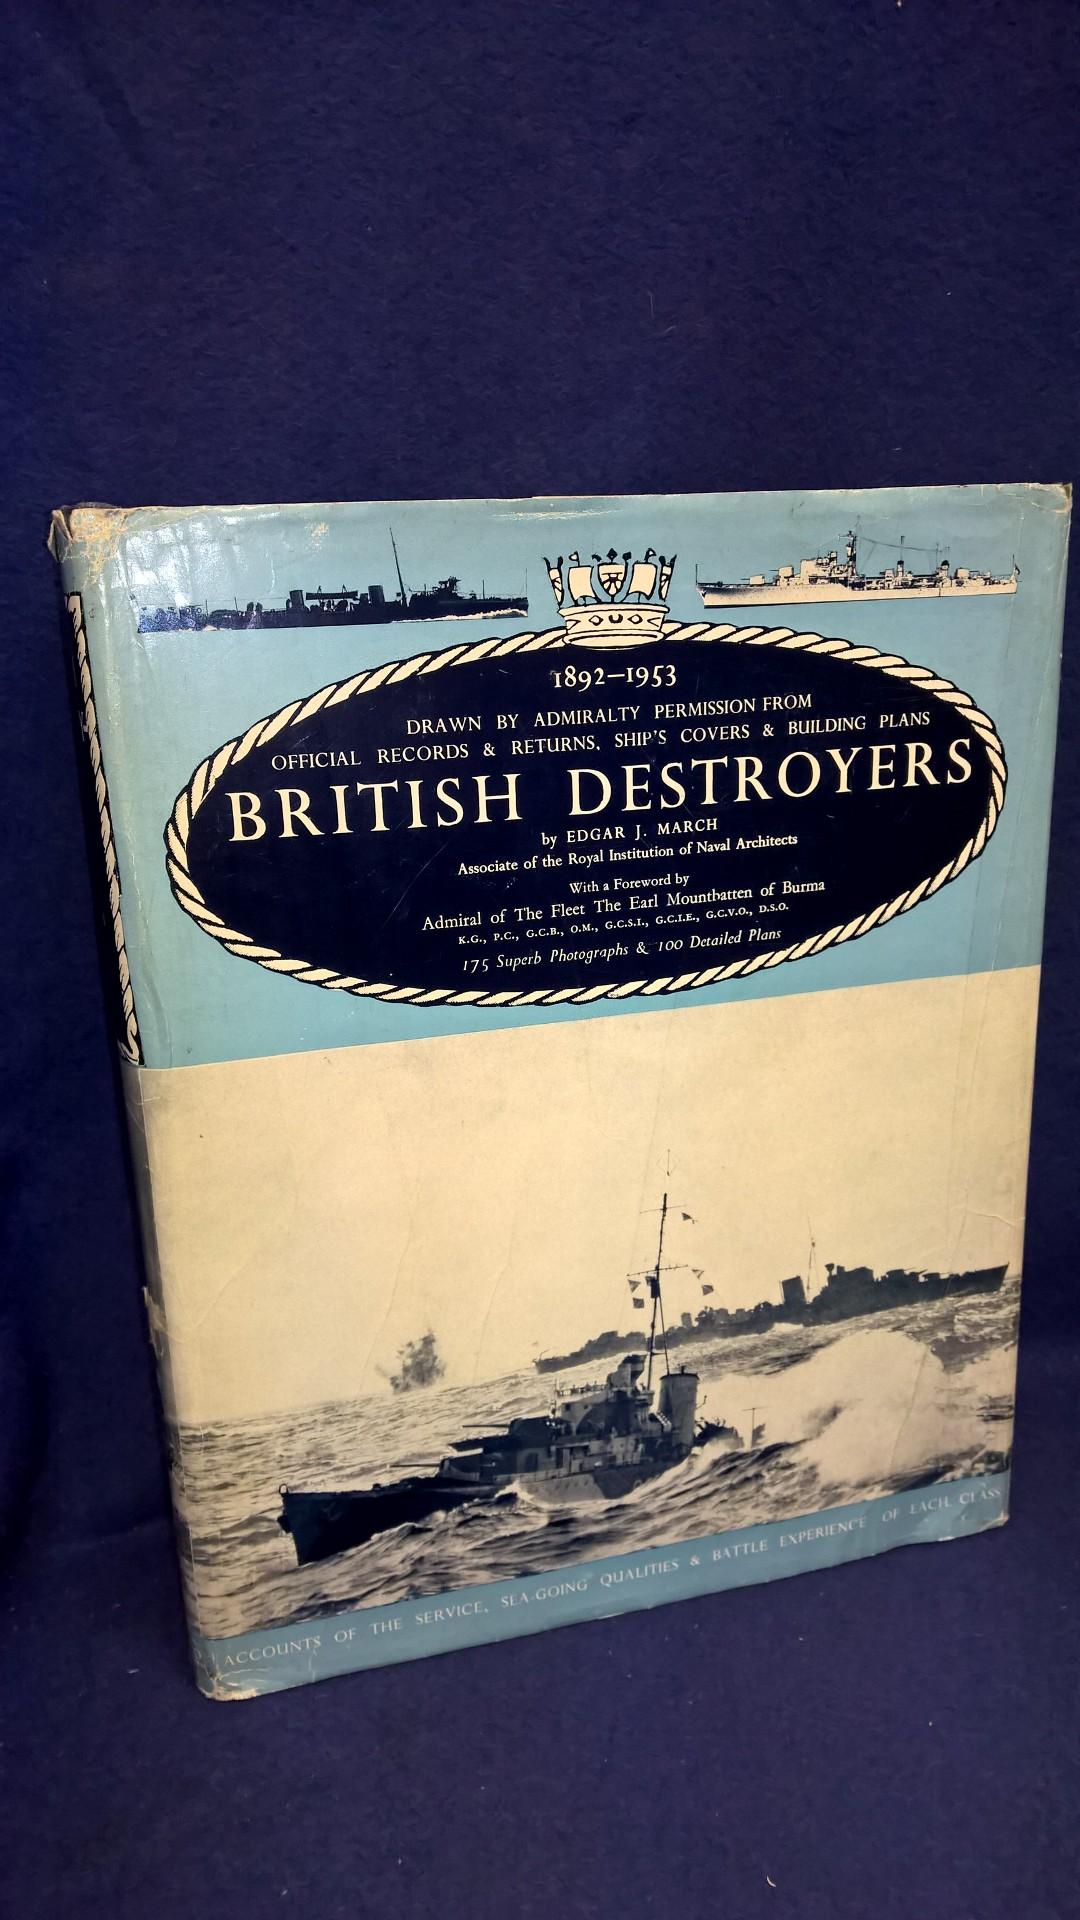 British Destroyers. A history of development 1892-1953. 